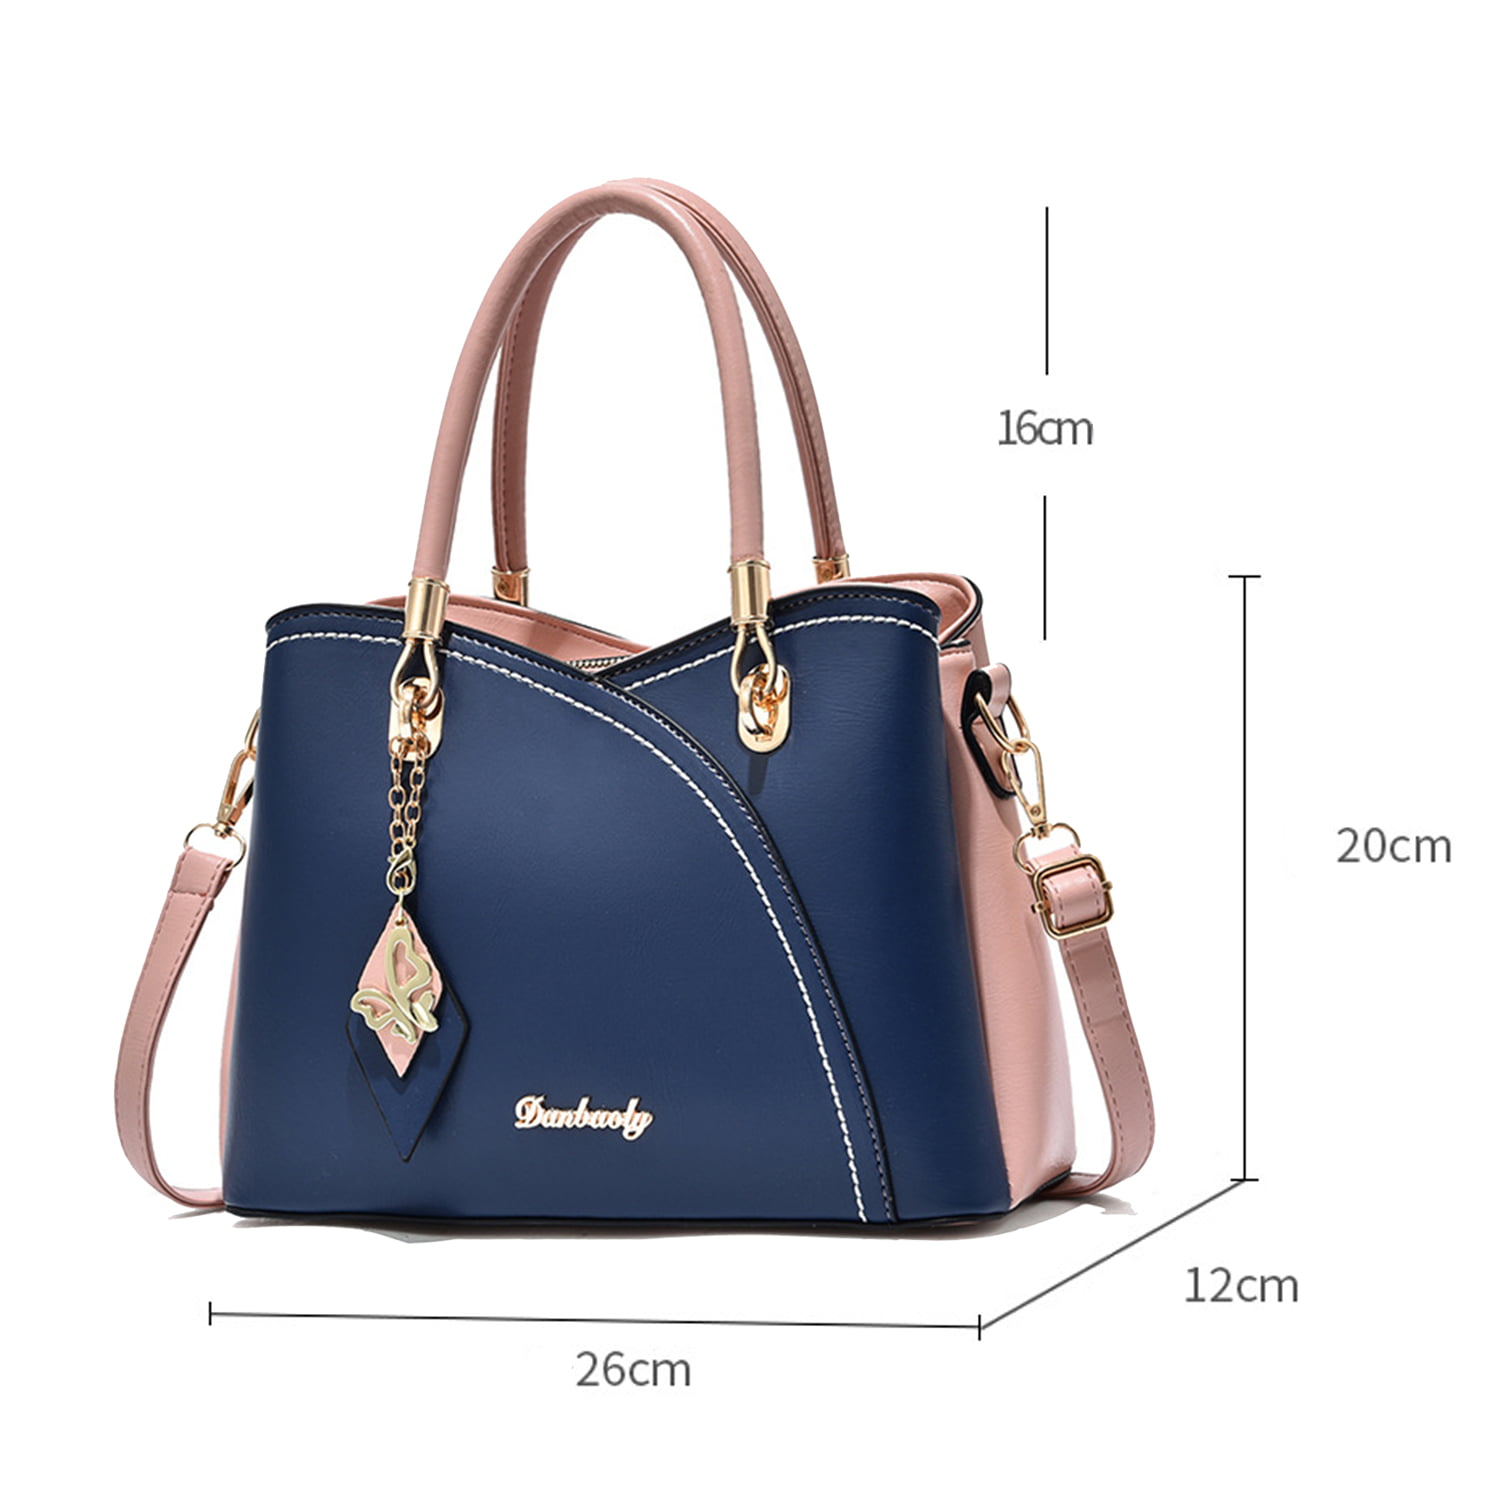 Ruzaworld Handbag for Women and Girls casual Shoulder Bag Purse